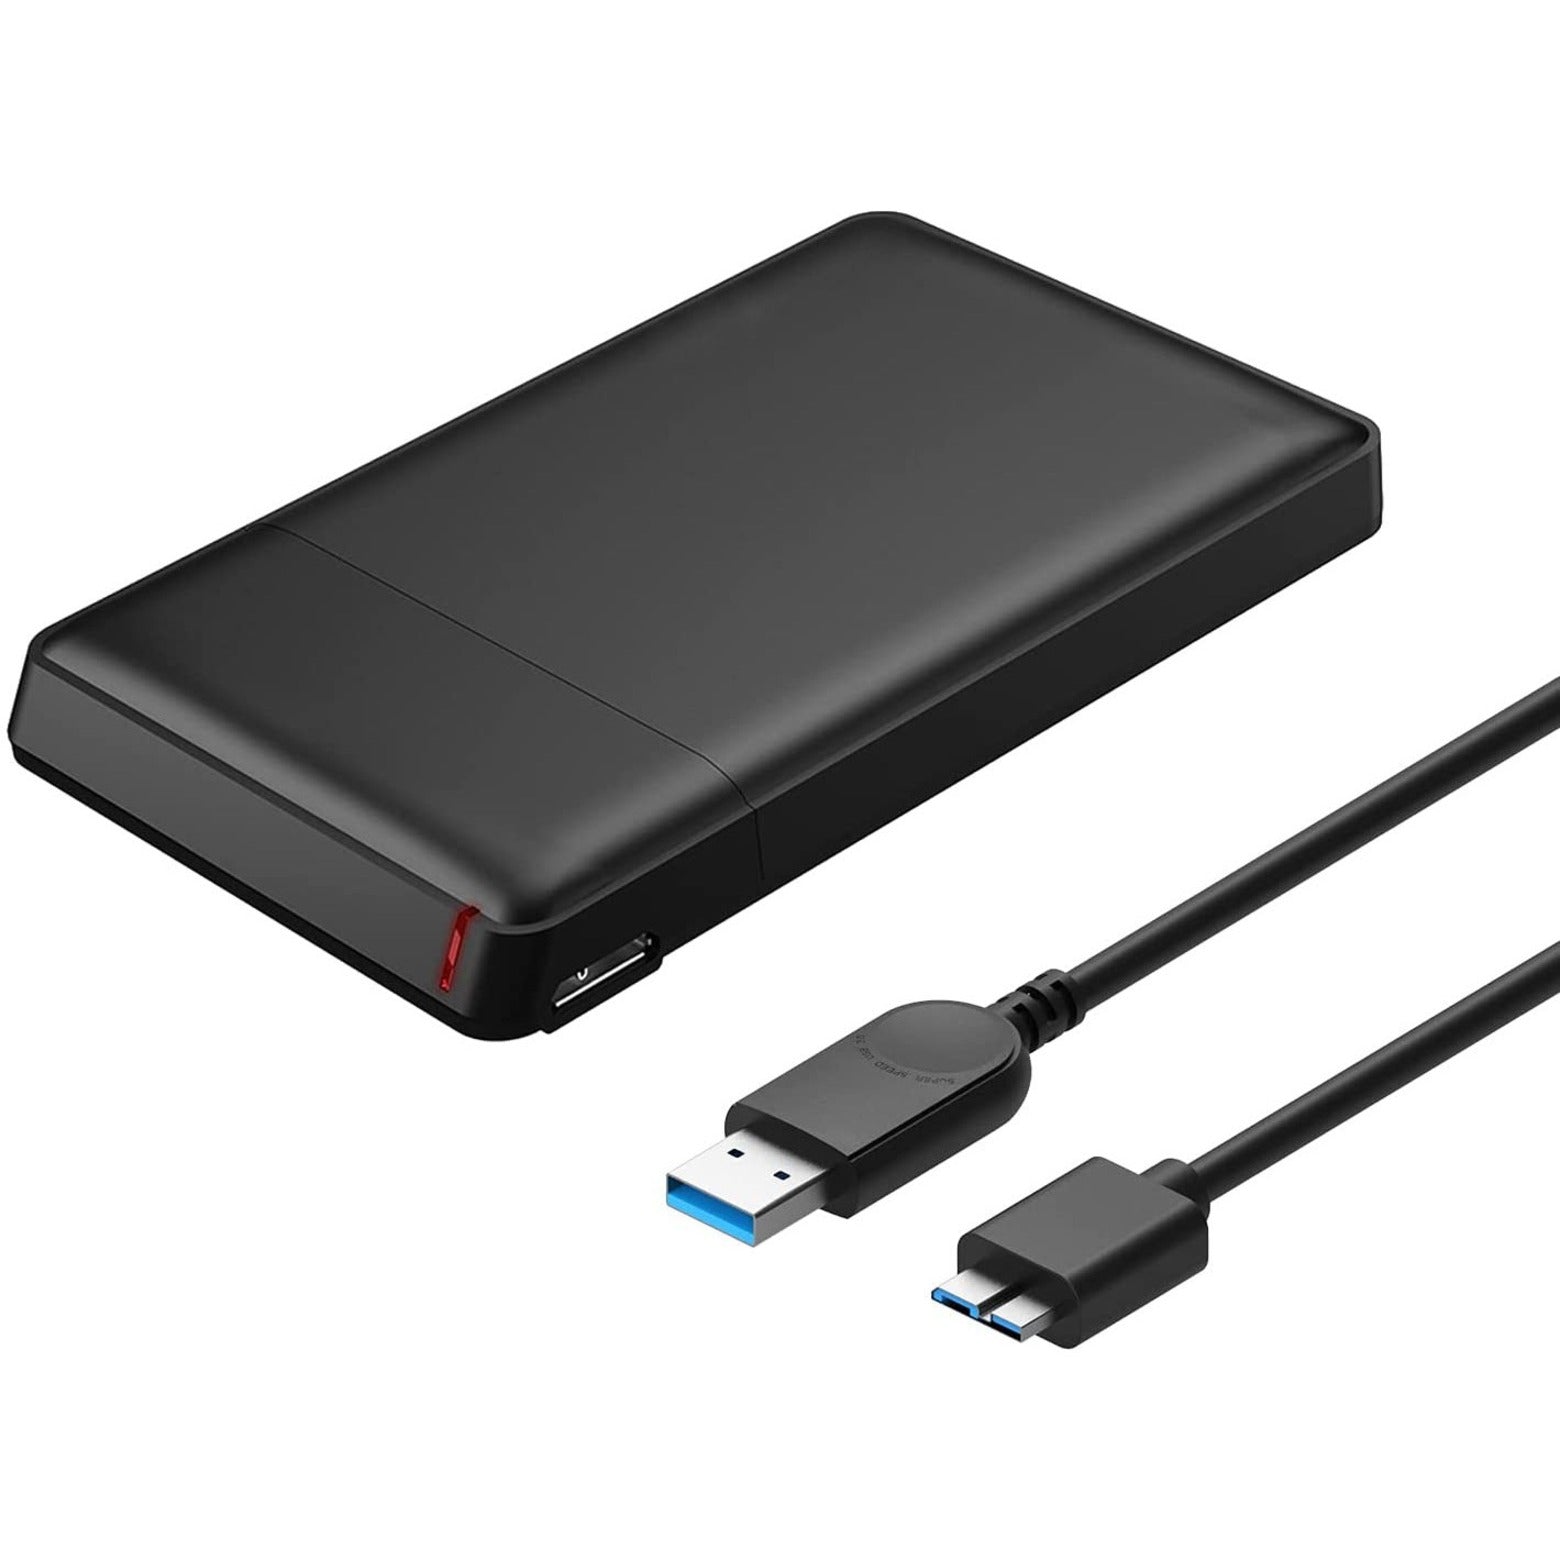 4XEM 4XST235 USB 3.0 SATA Hard Drive Enclosure, External - Black, 1 Year Warranty, Hot Swappable Bays